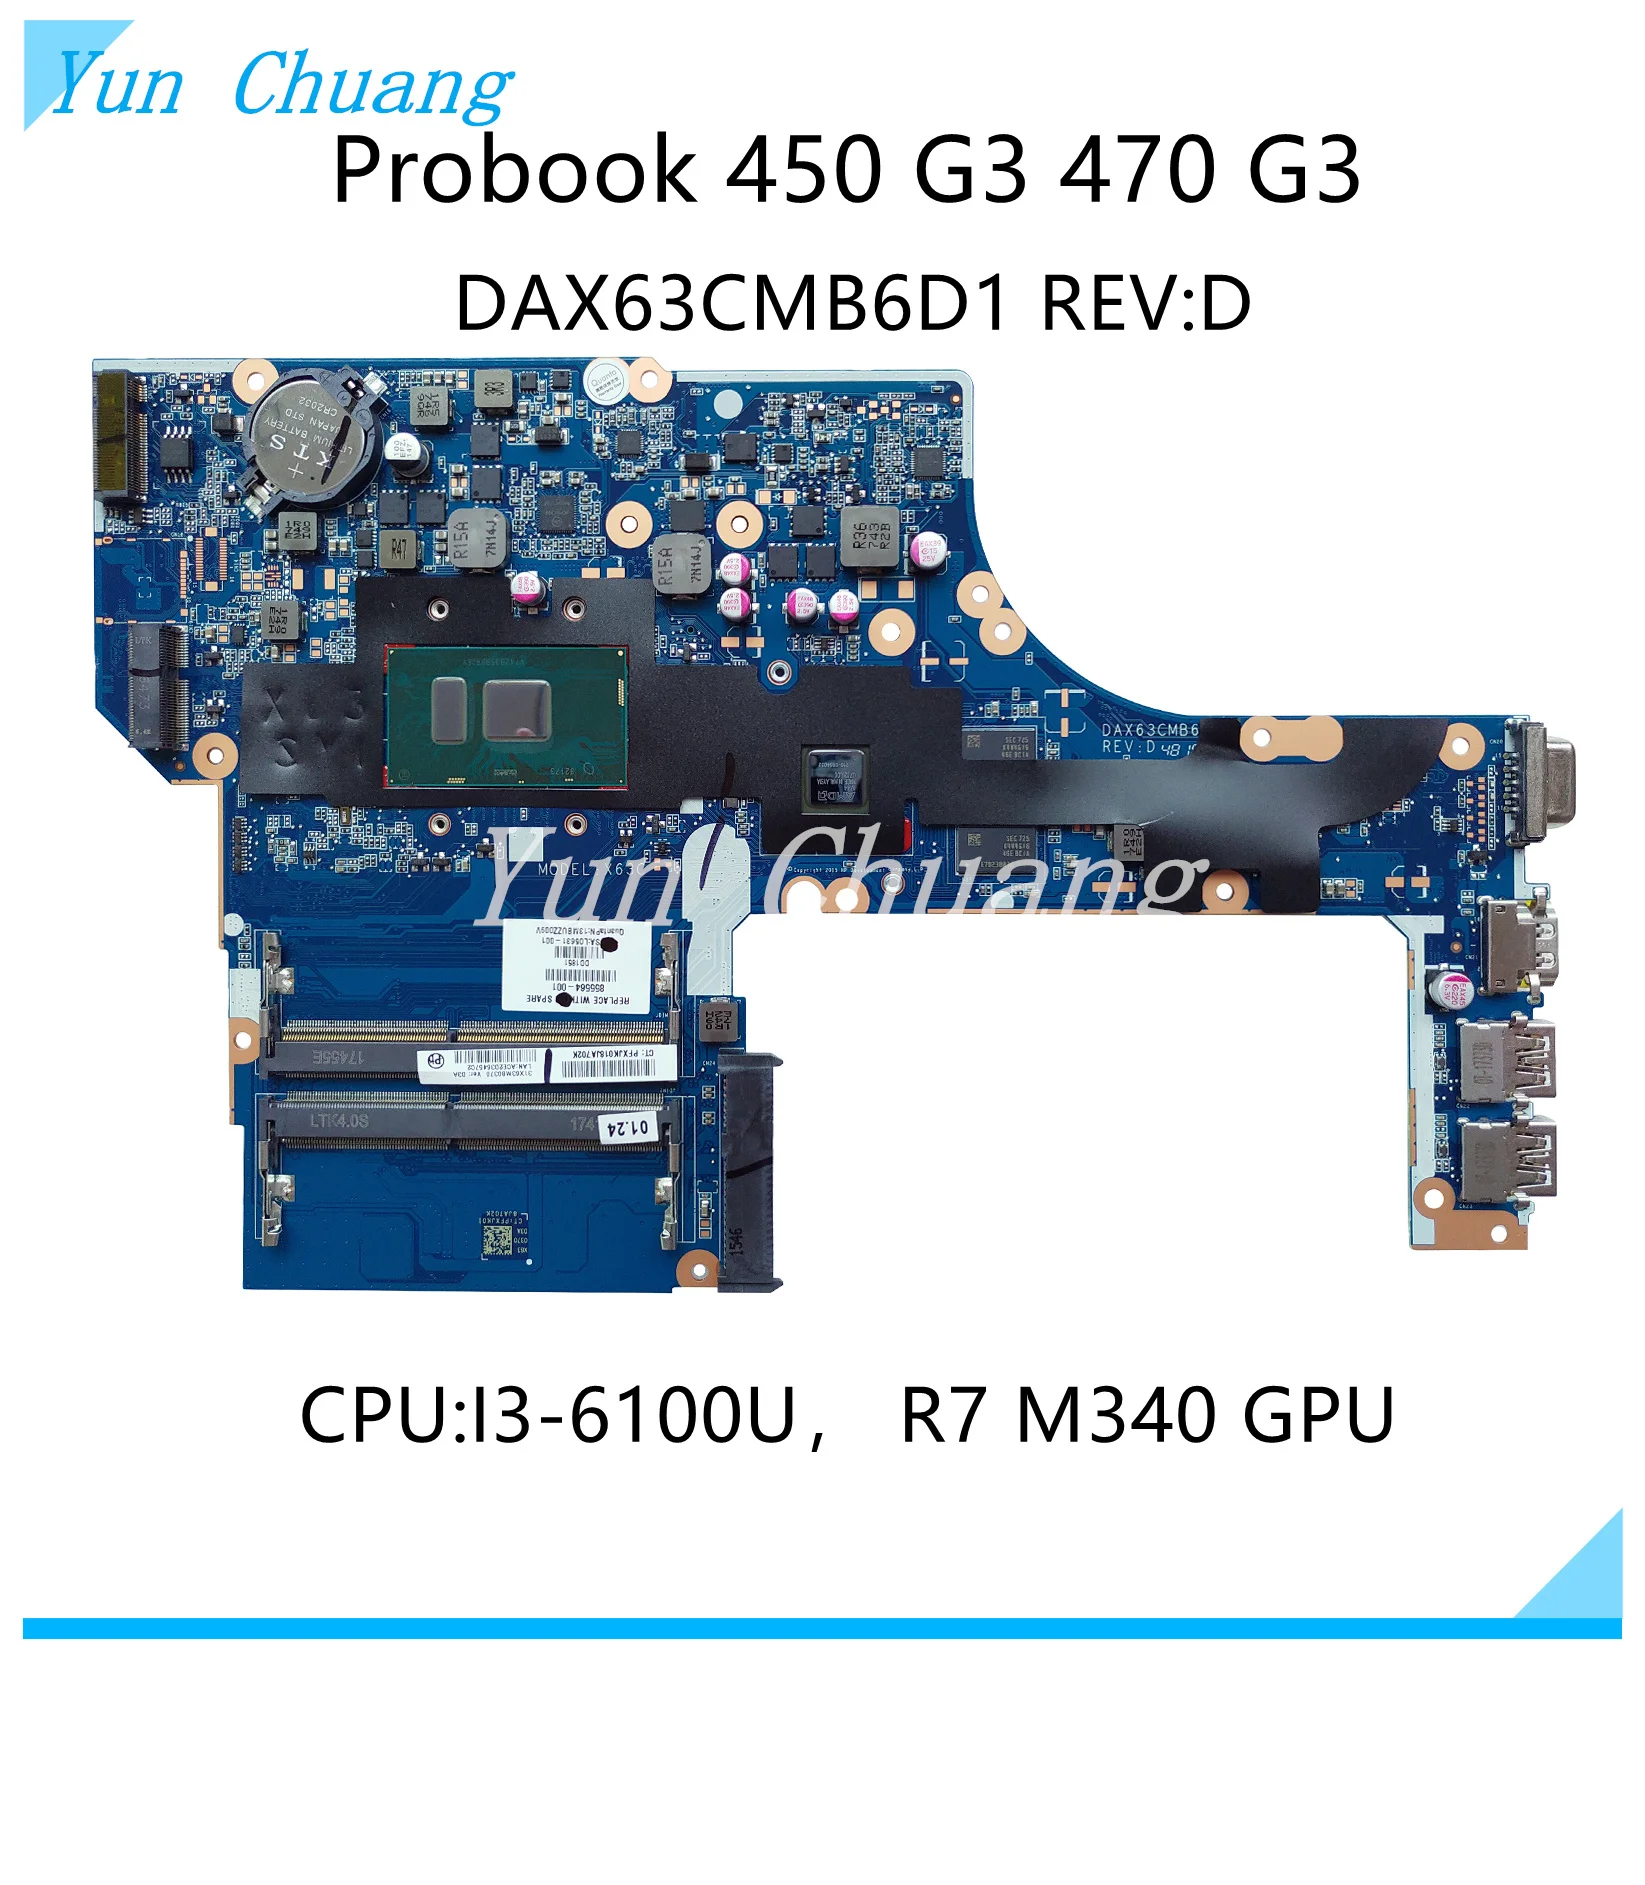 DAX63CMB6D1 DAX63CMB6C0 Для HP Probook 470 G3 450 G3 Материнская плата ноутбука С процессором i3-6100U DDR4 R7 M340 GPU 100% полностью протестирована